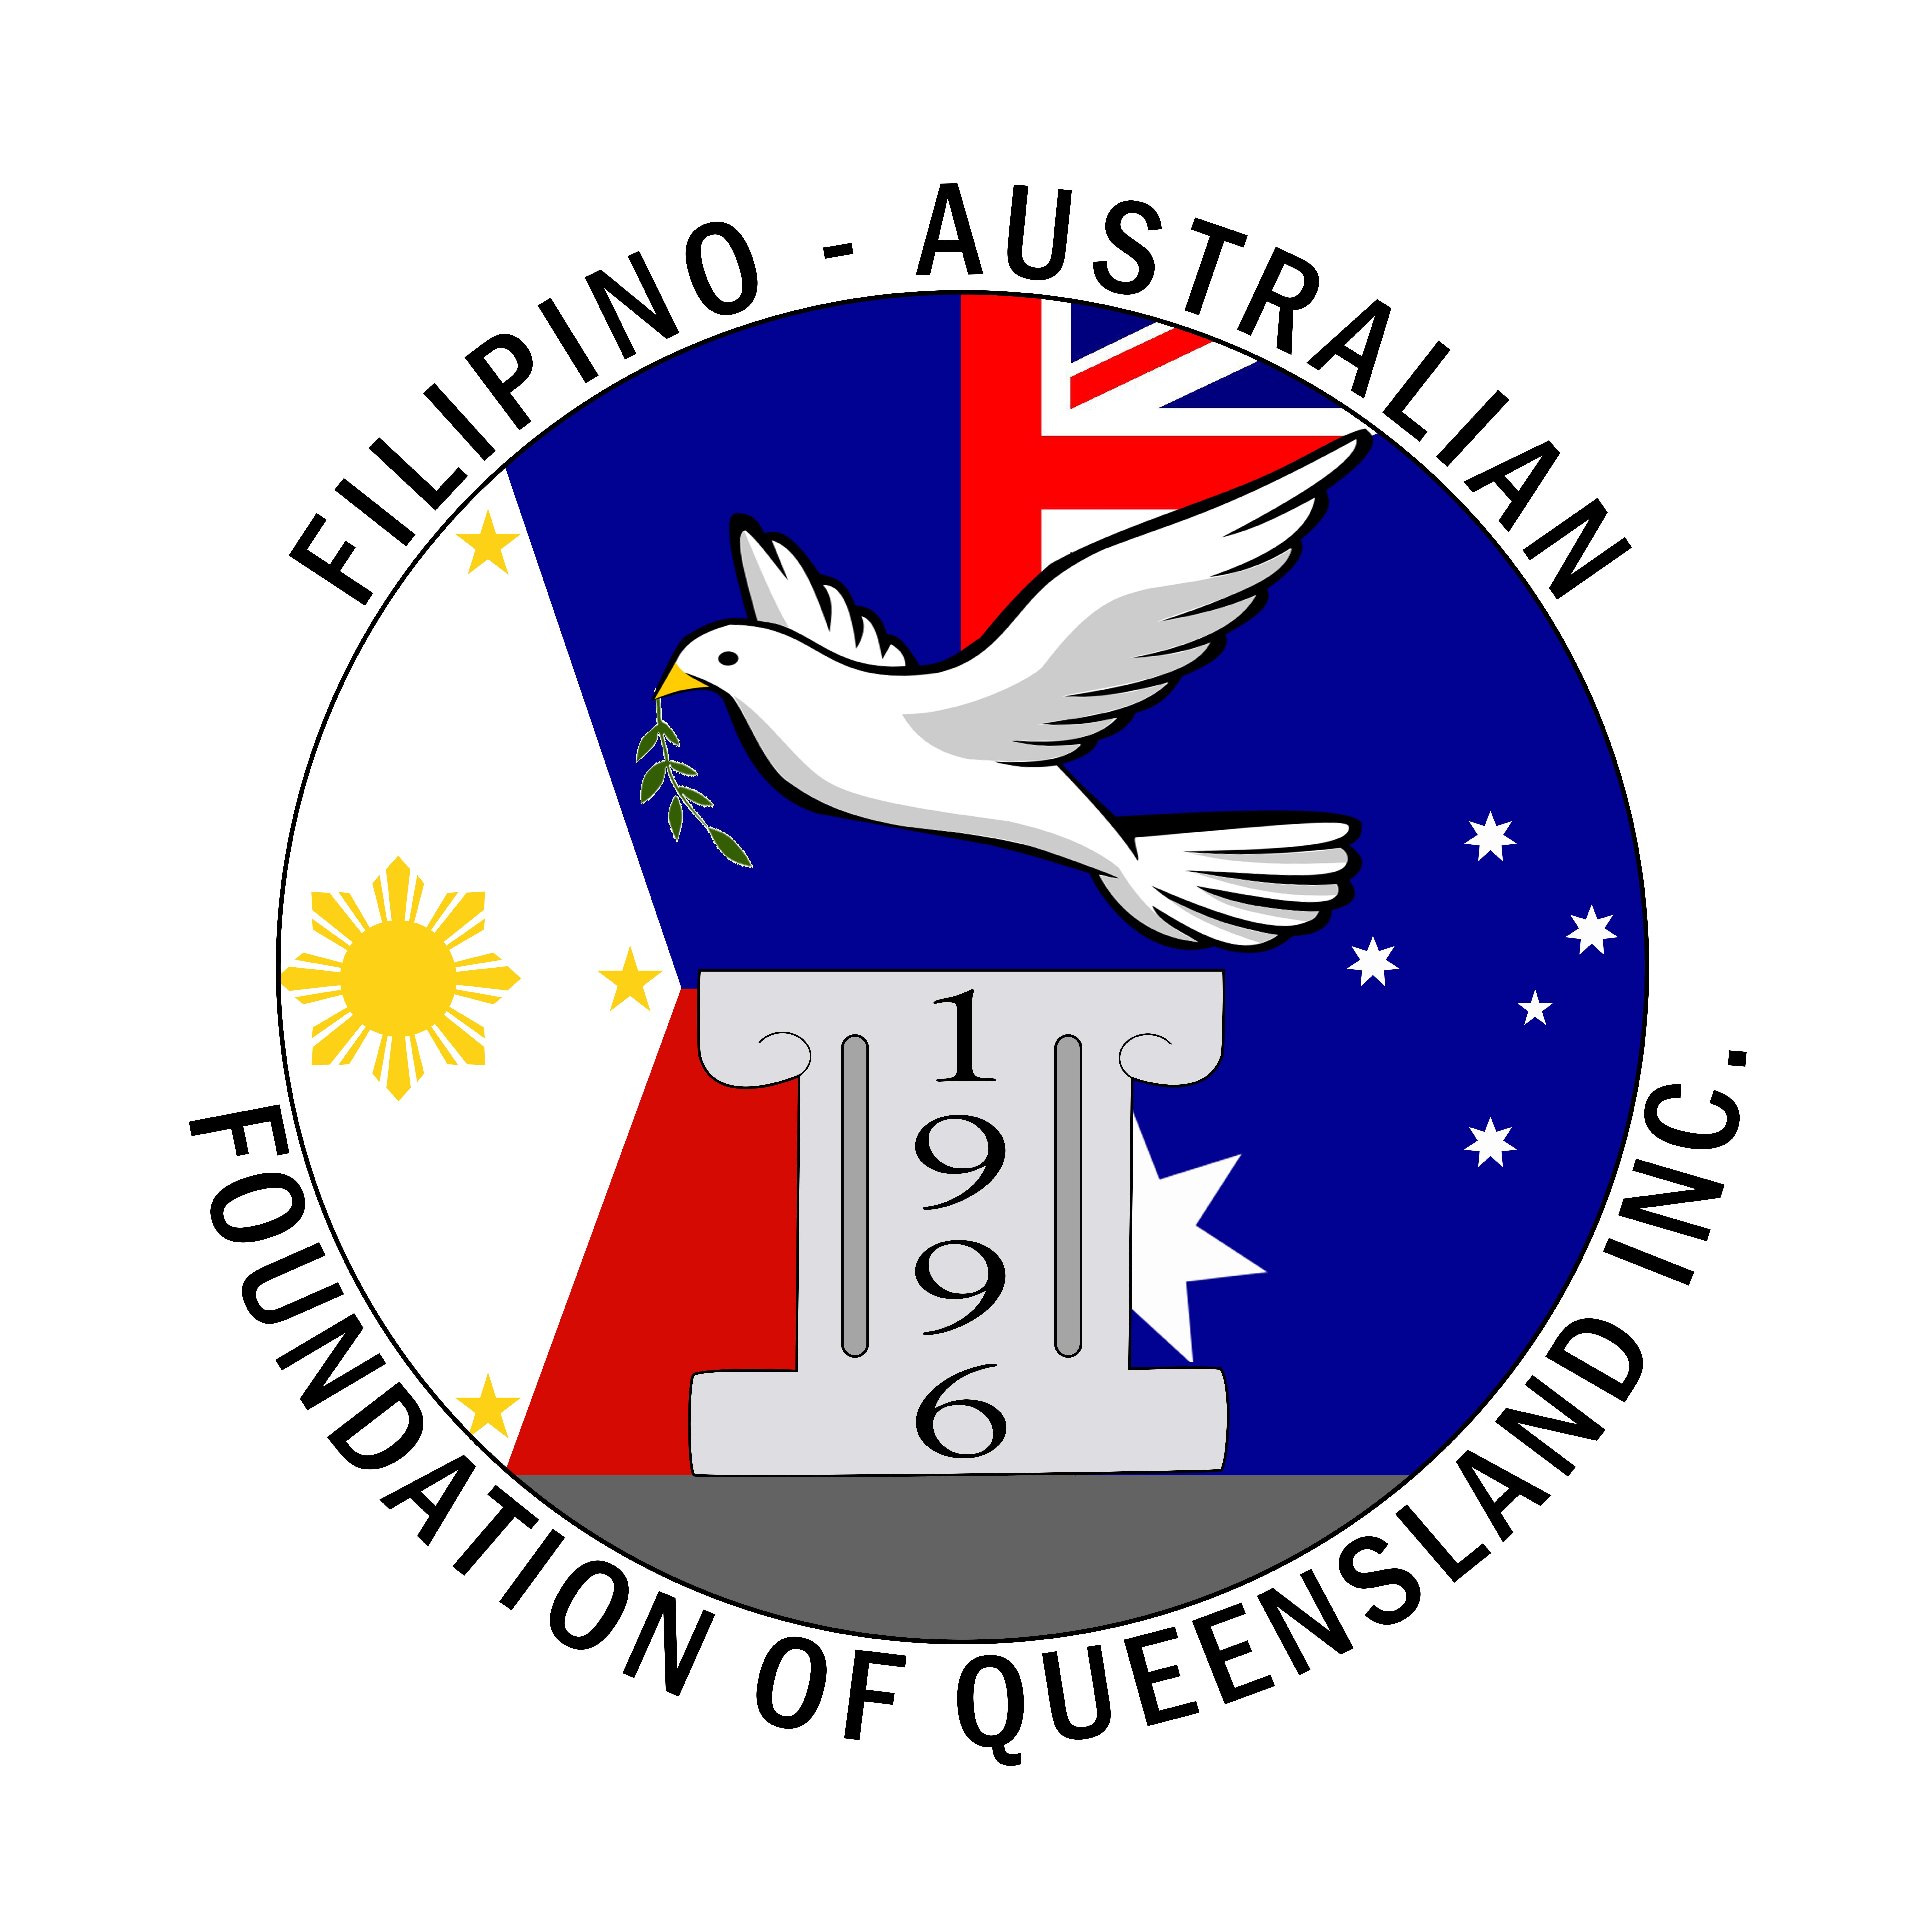 Filipino - Australian Foundation of Queensland